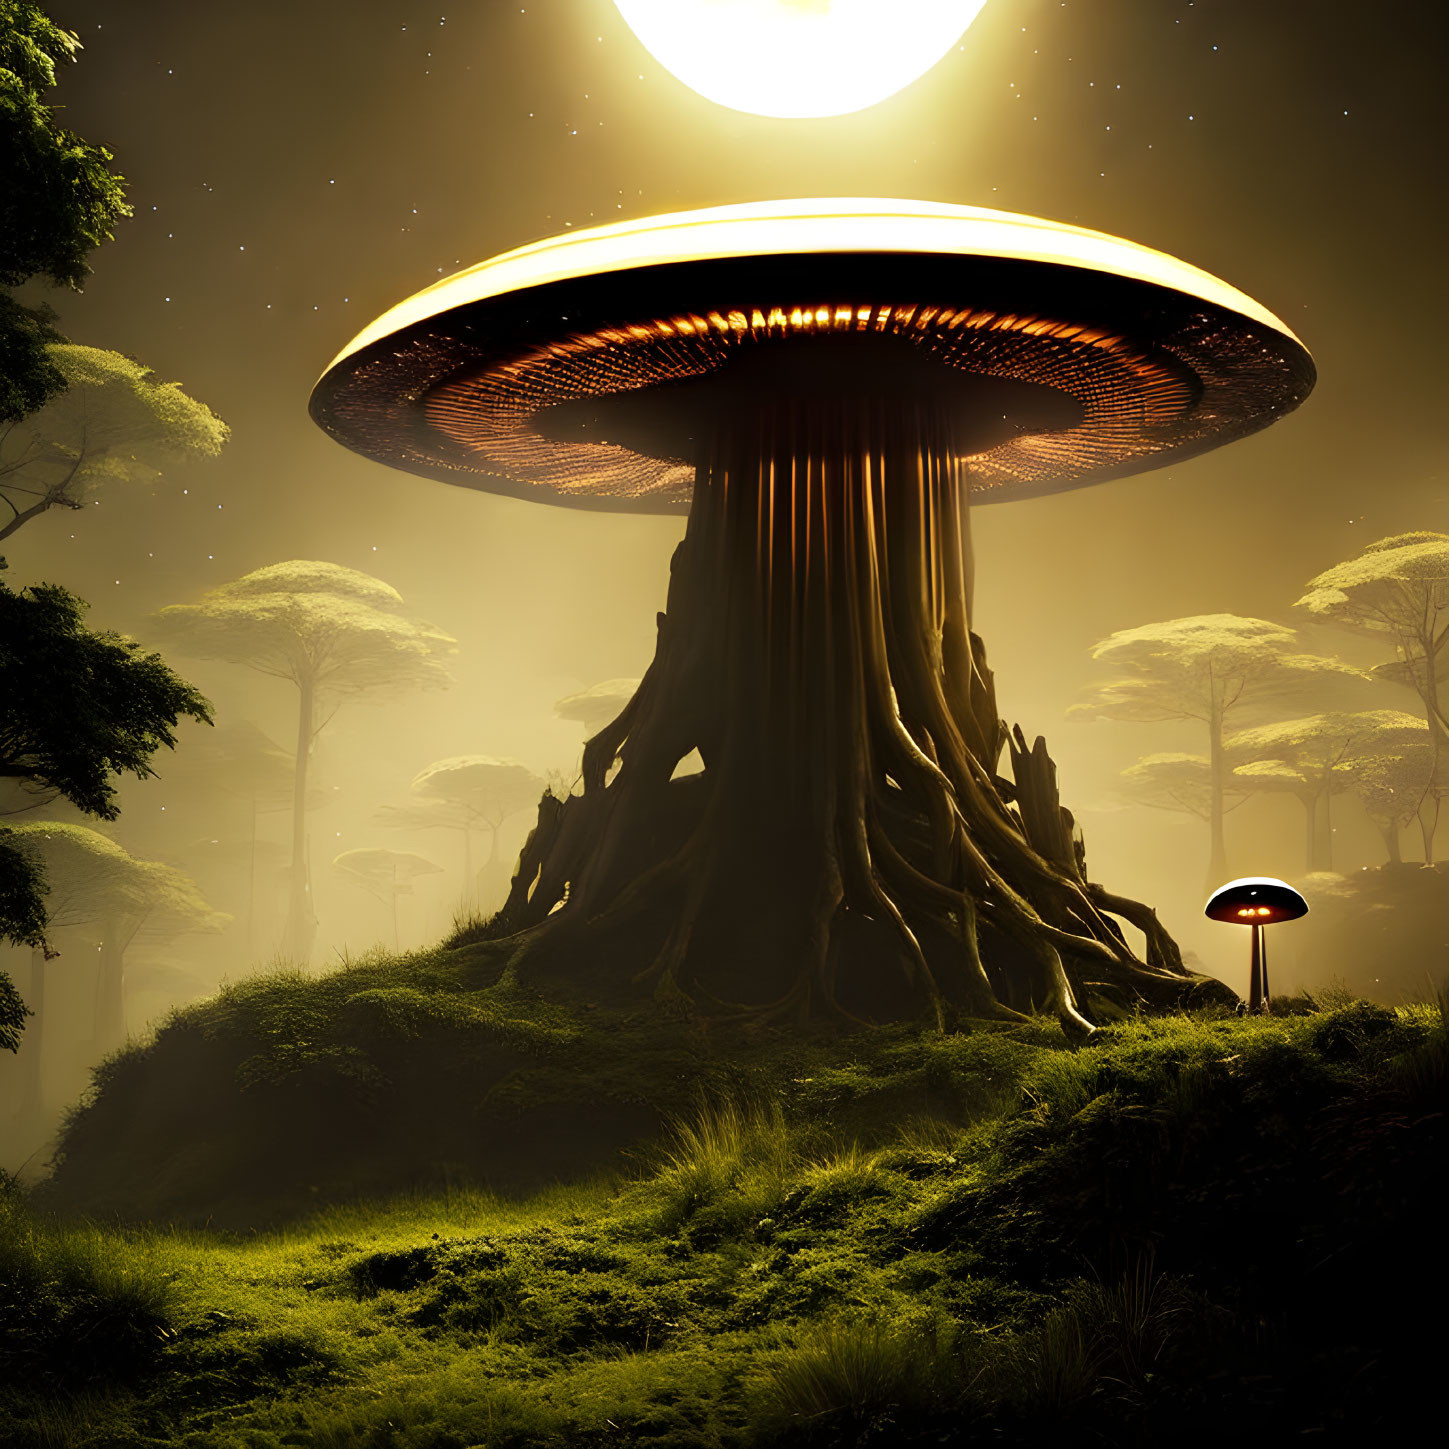 Giant glowing mushroom in mystical forest under celestial body